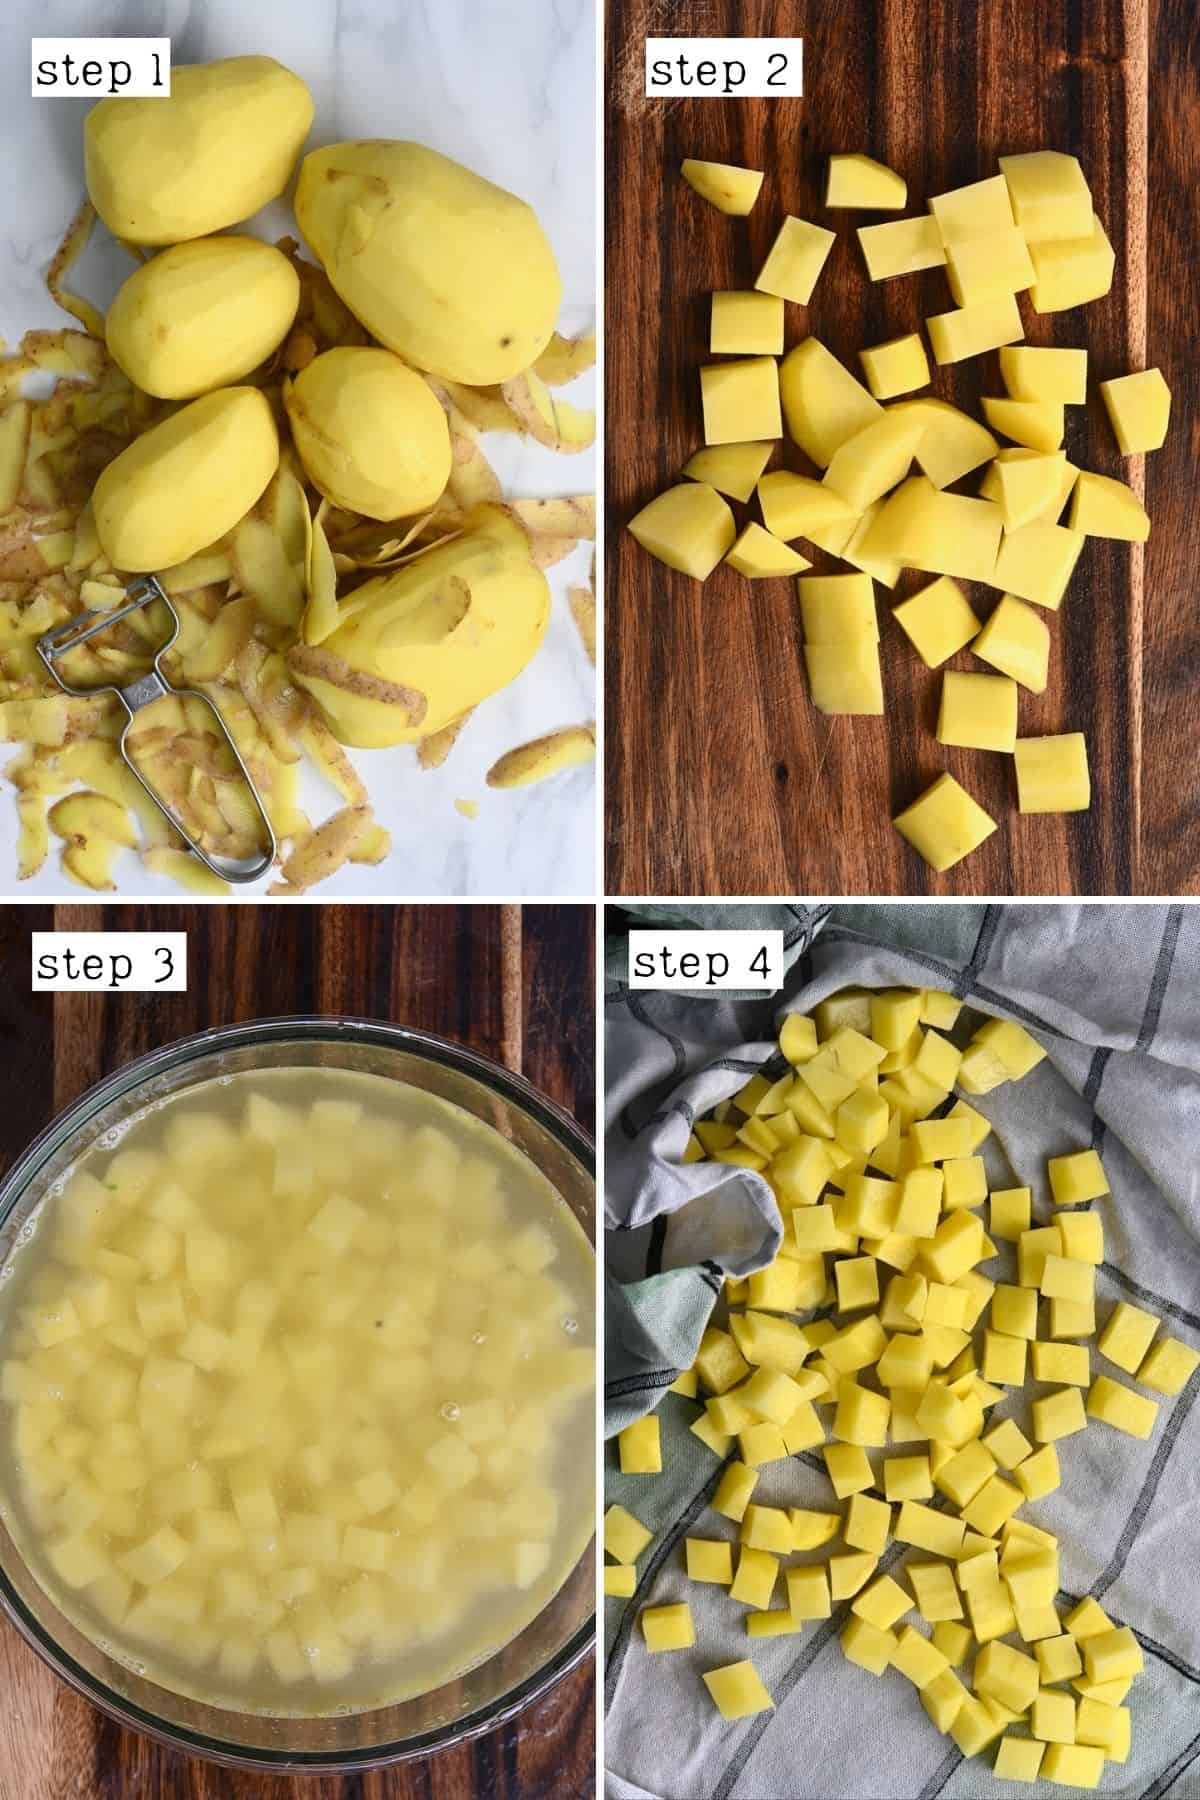 Steps for preparing potatoes for frying